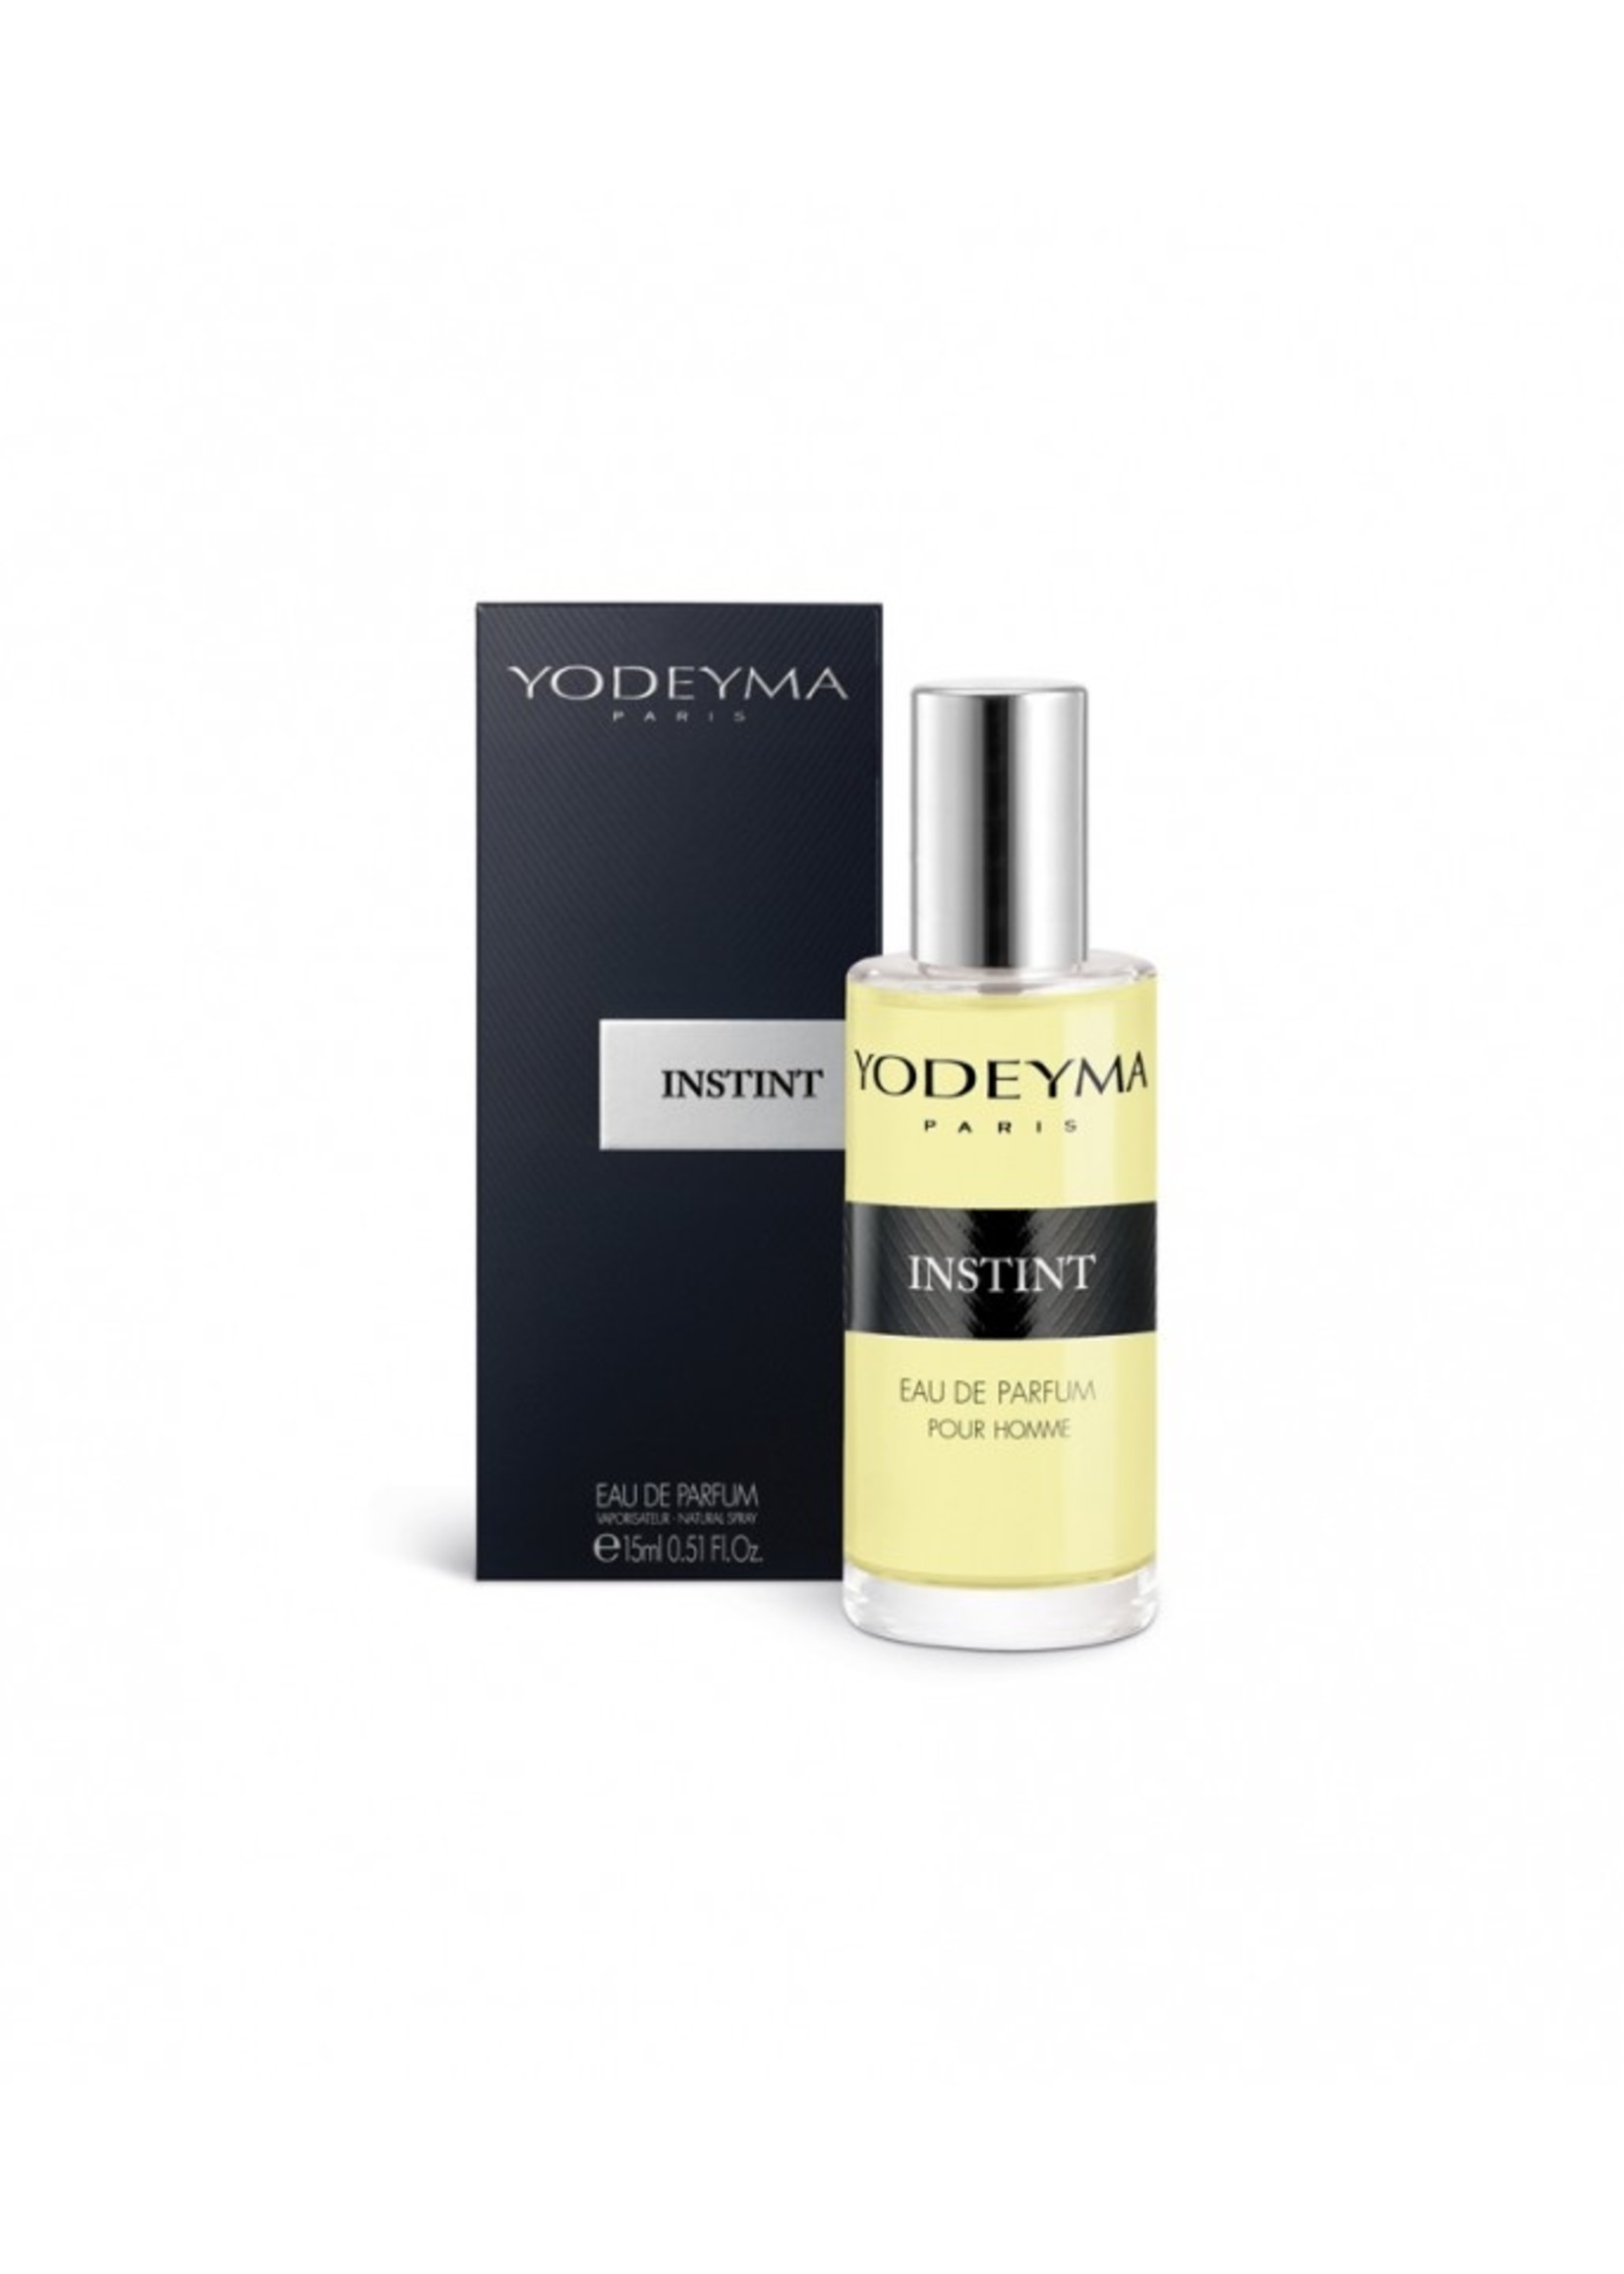 Yodeyma Parfums INSTINT Eau de Parfum 15 ml.